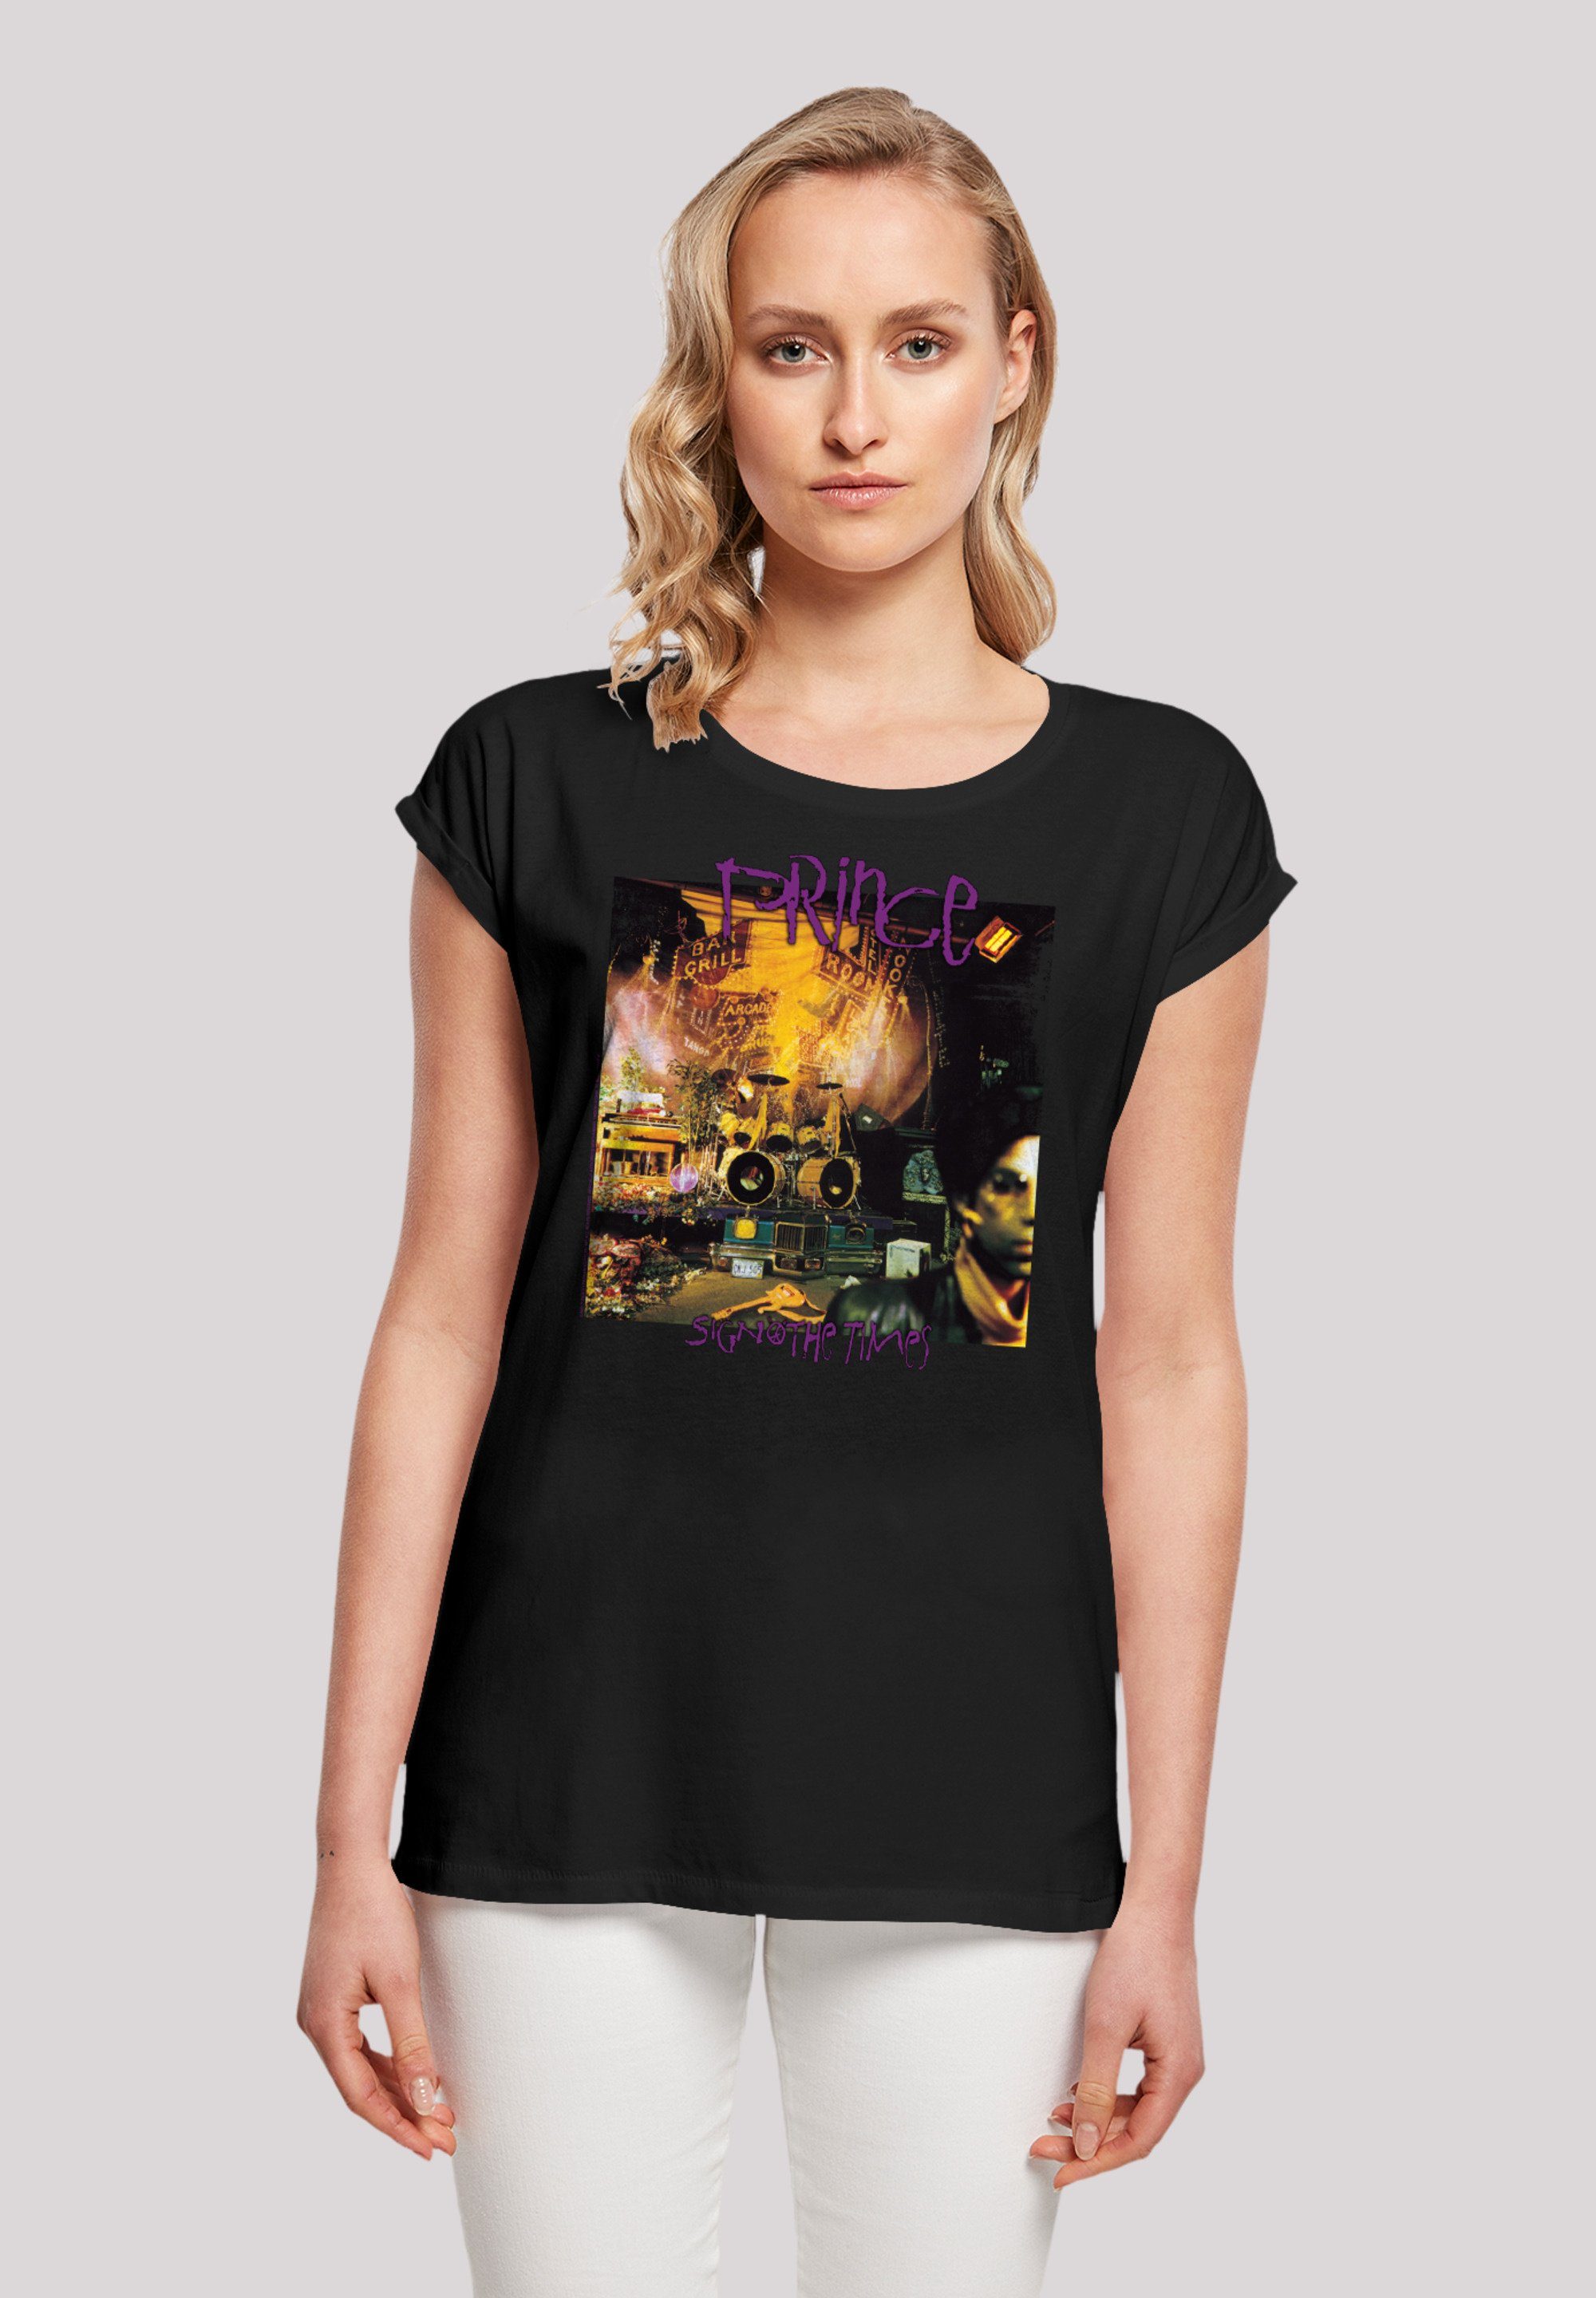 F4NT4STIC T-Shirt Prince Musik Sign Times Premium The Rock-Musik, Band Qualität, O'